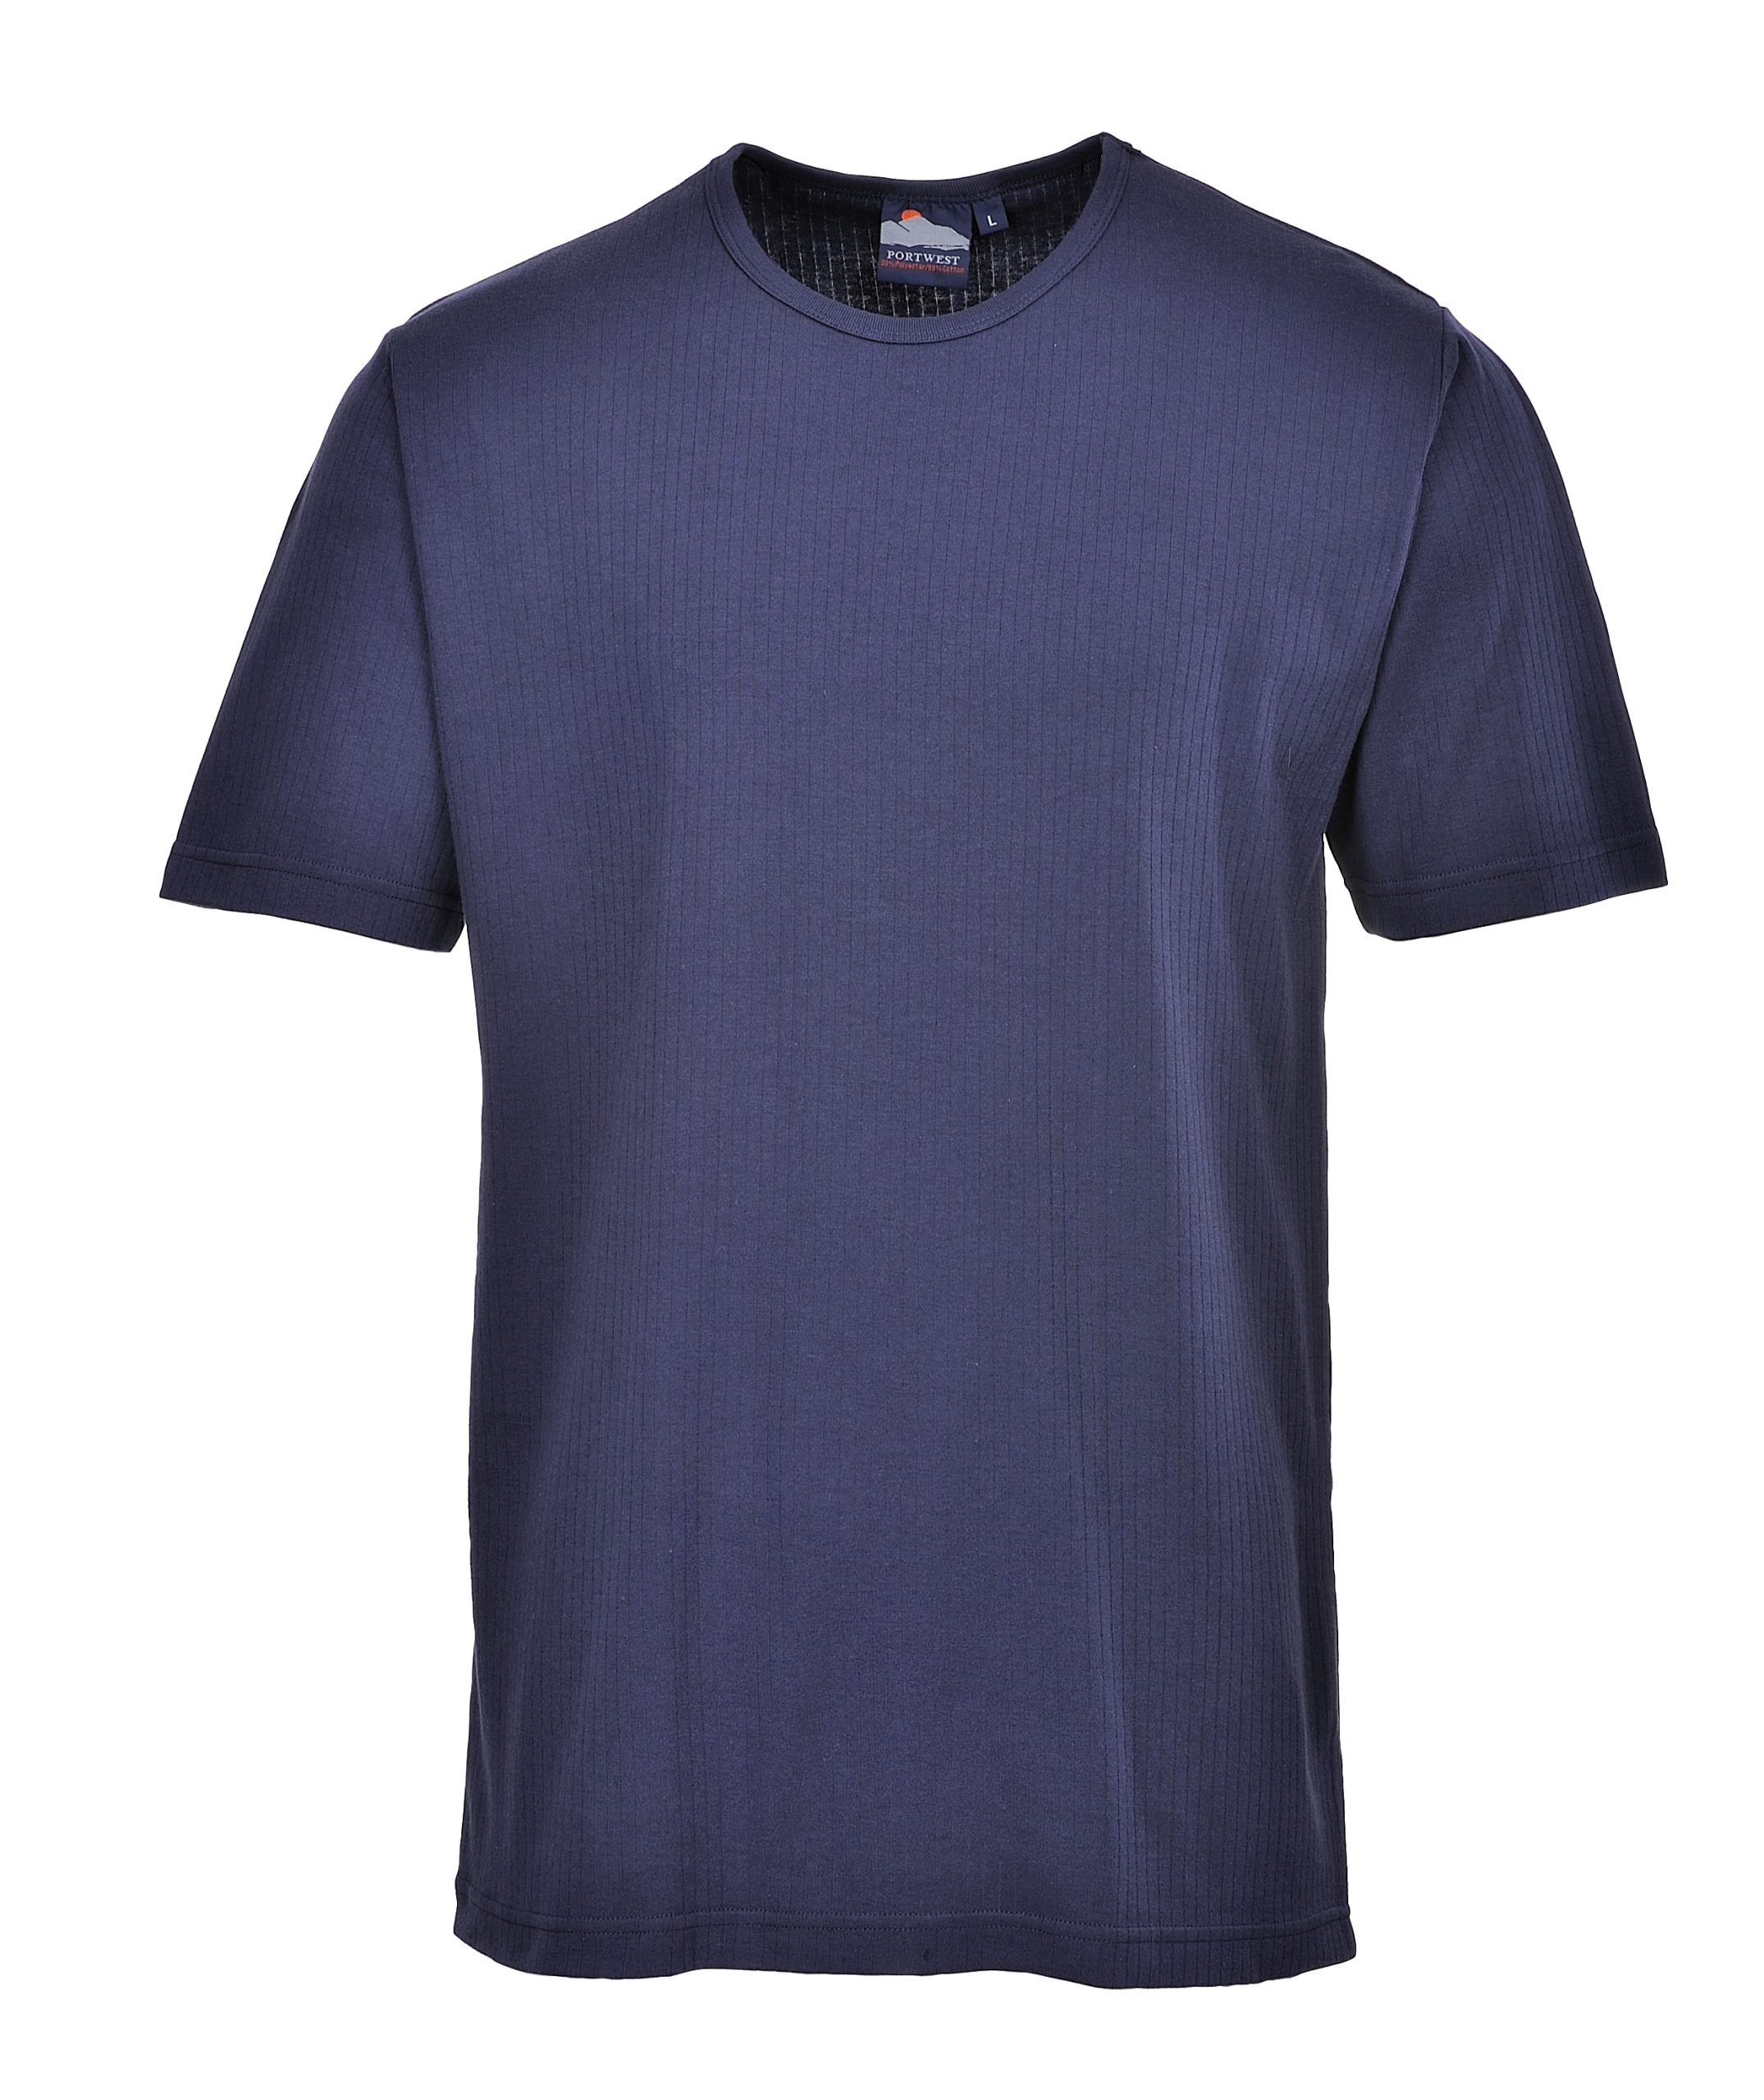 T-shirt thermique homme – Fit Super-Humain